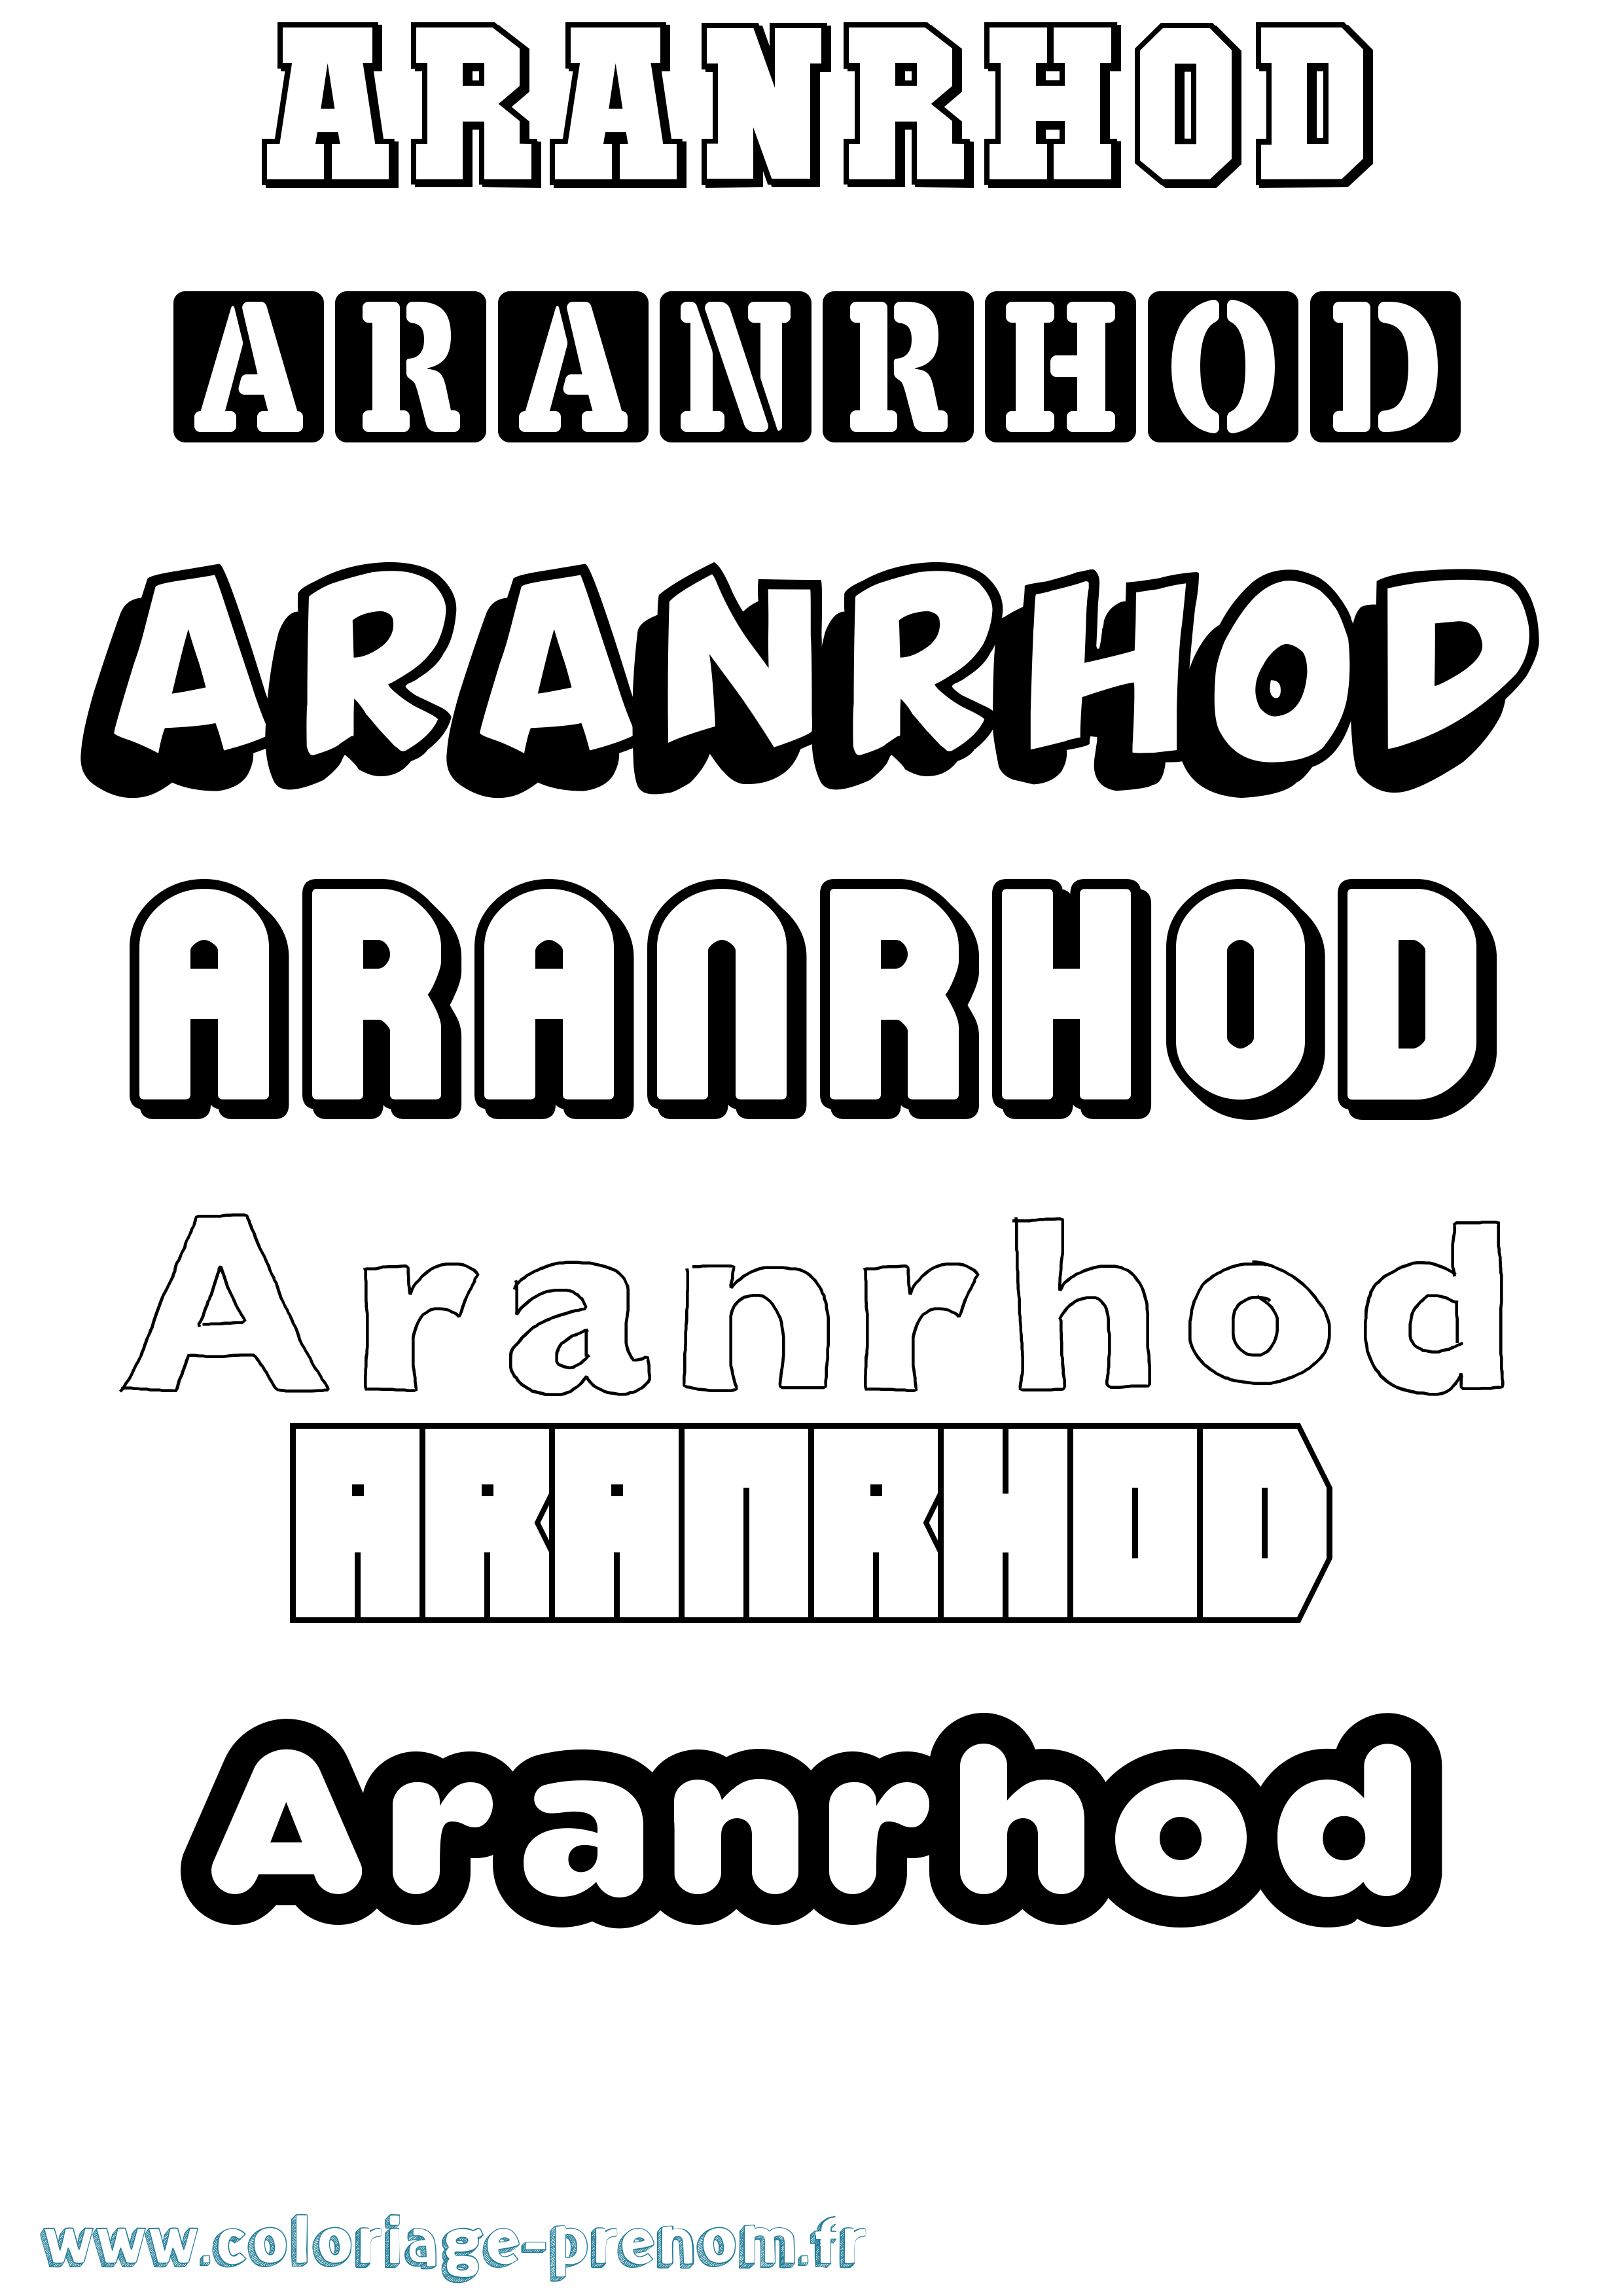 Coloriage prénom Aranrhod Simple